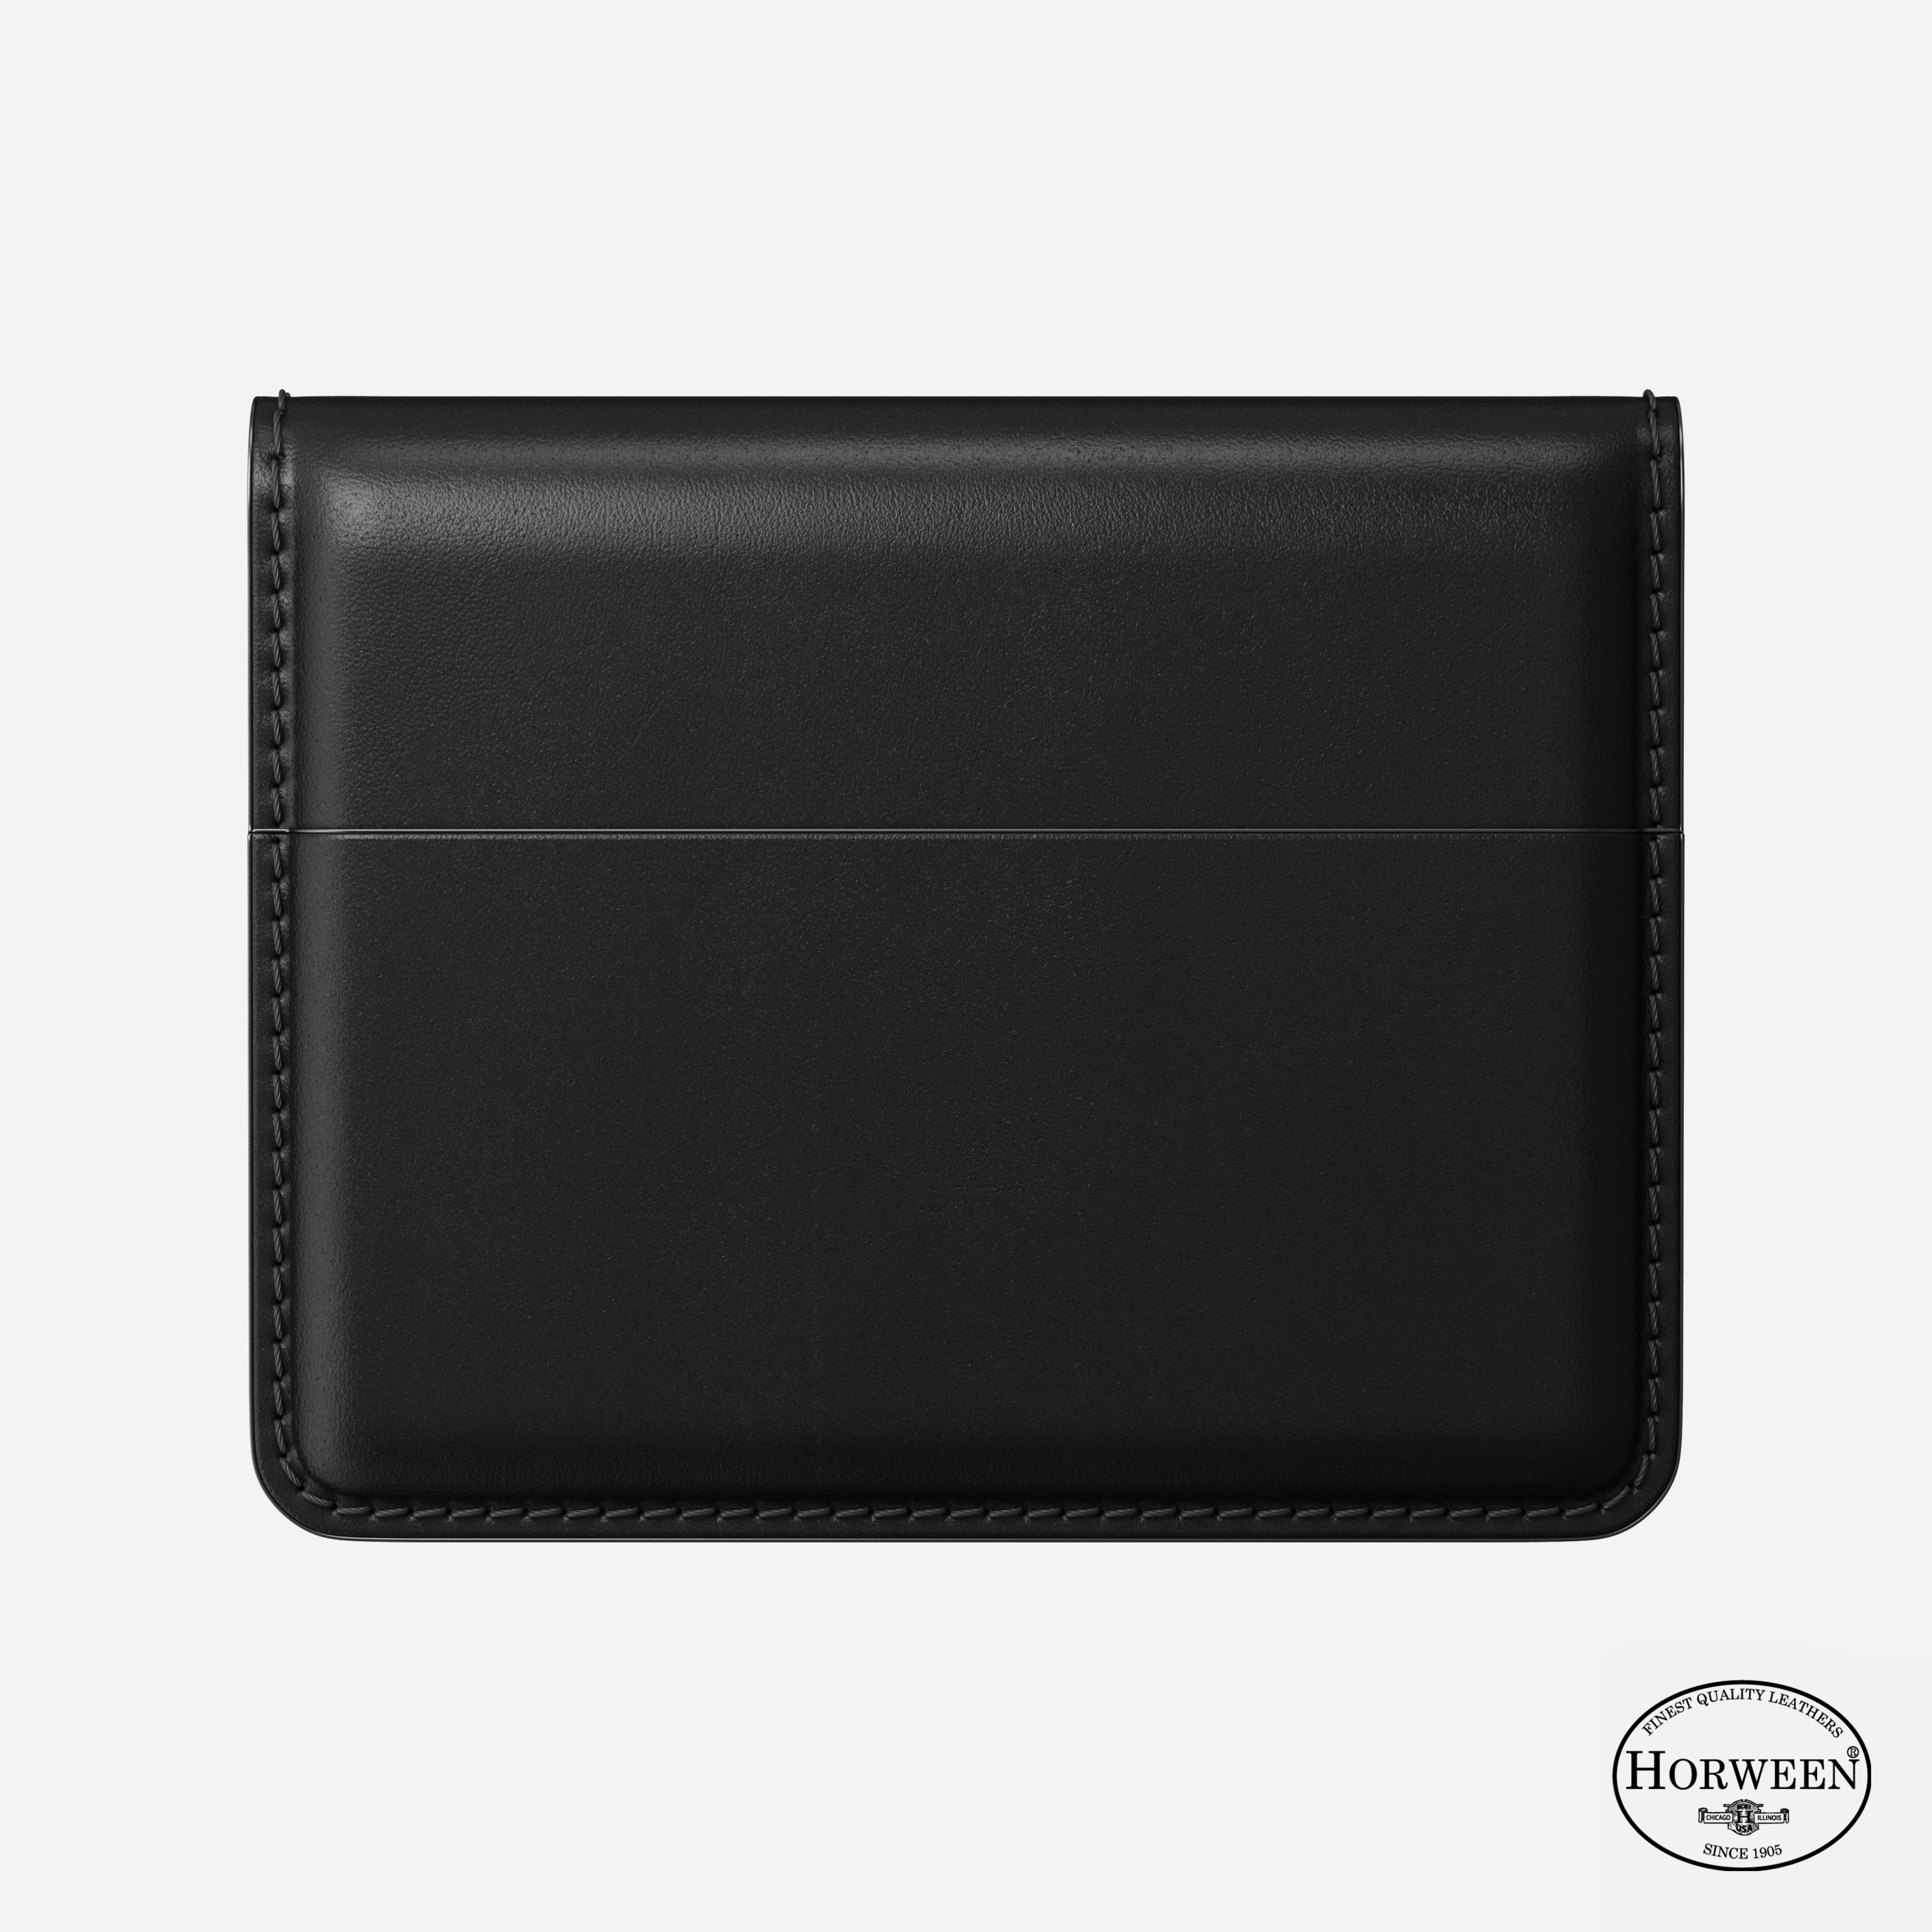 Card Wallet Plus, Black